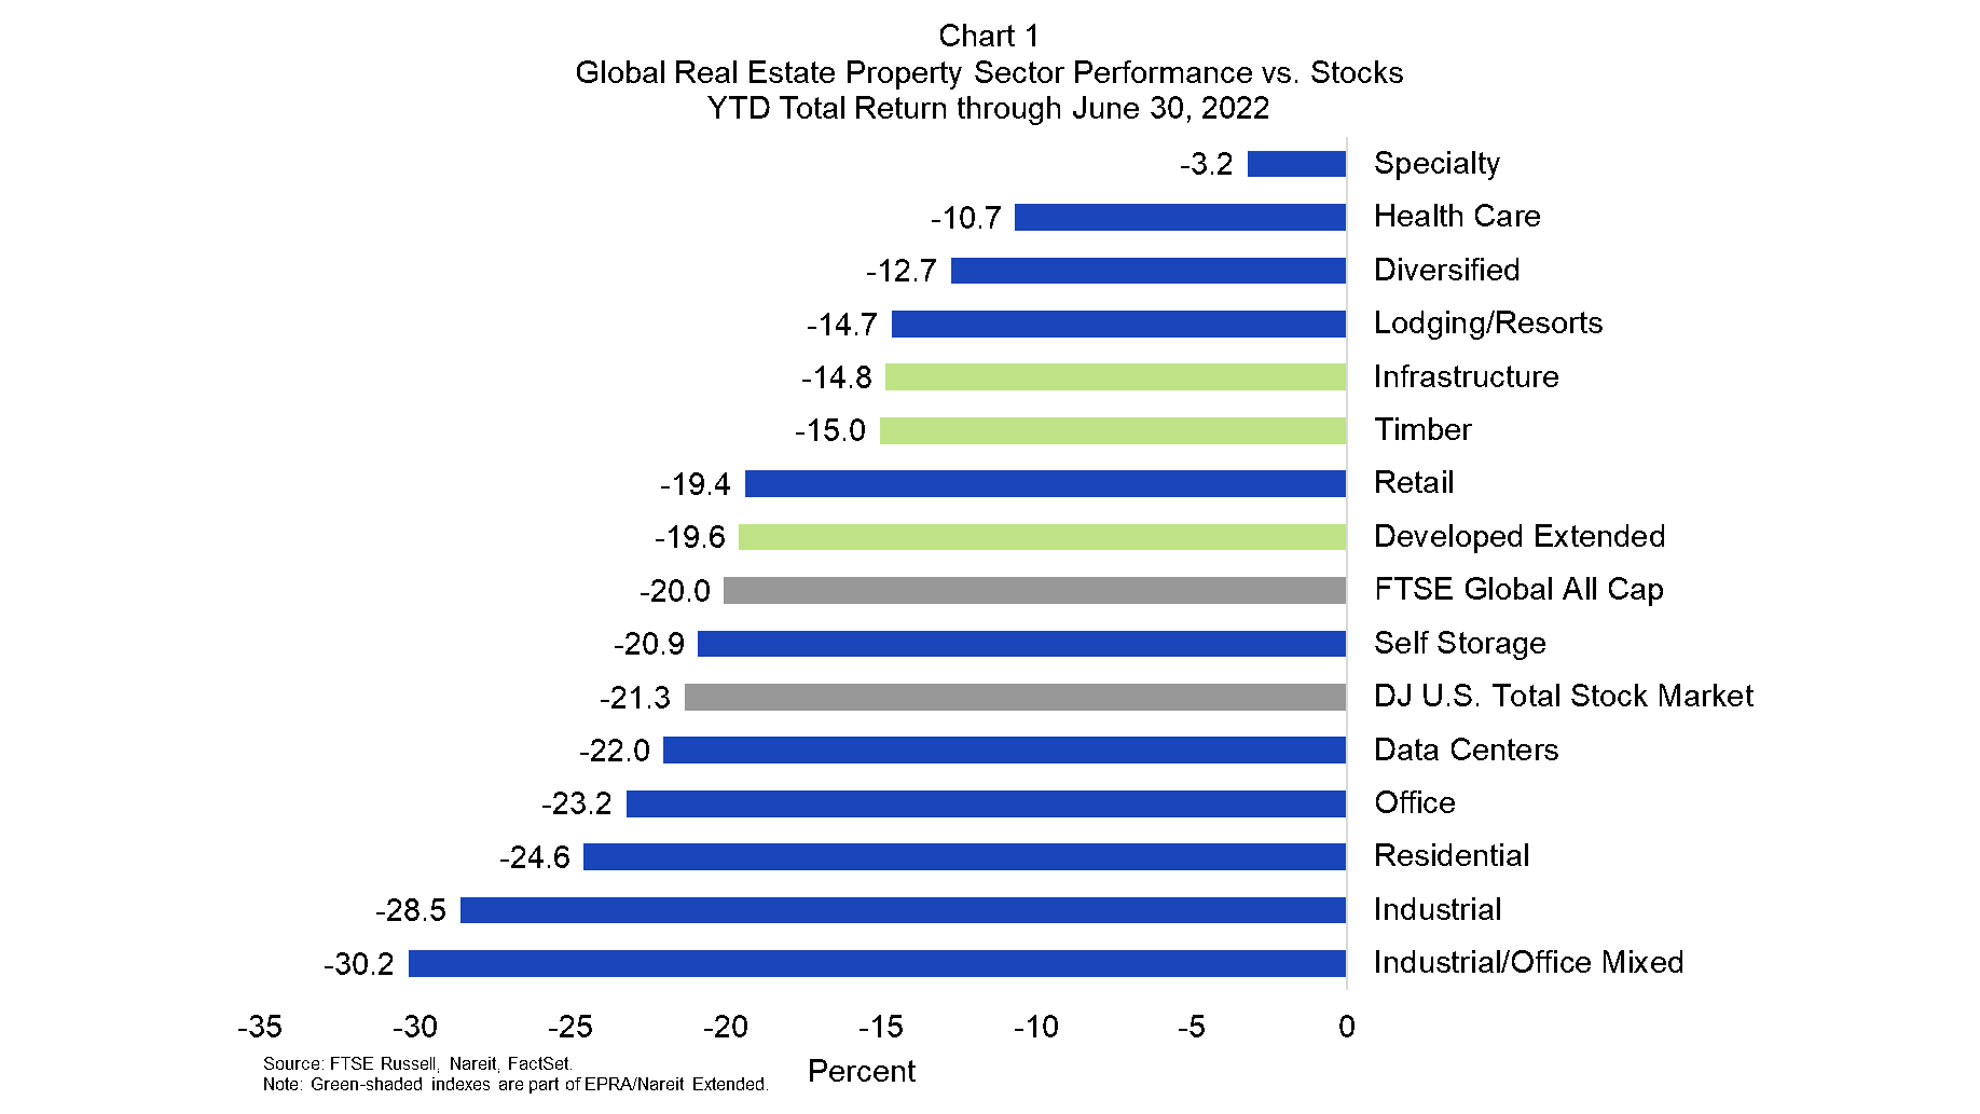 Global Real Estate Performance versus Stocks